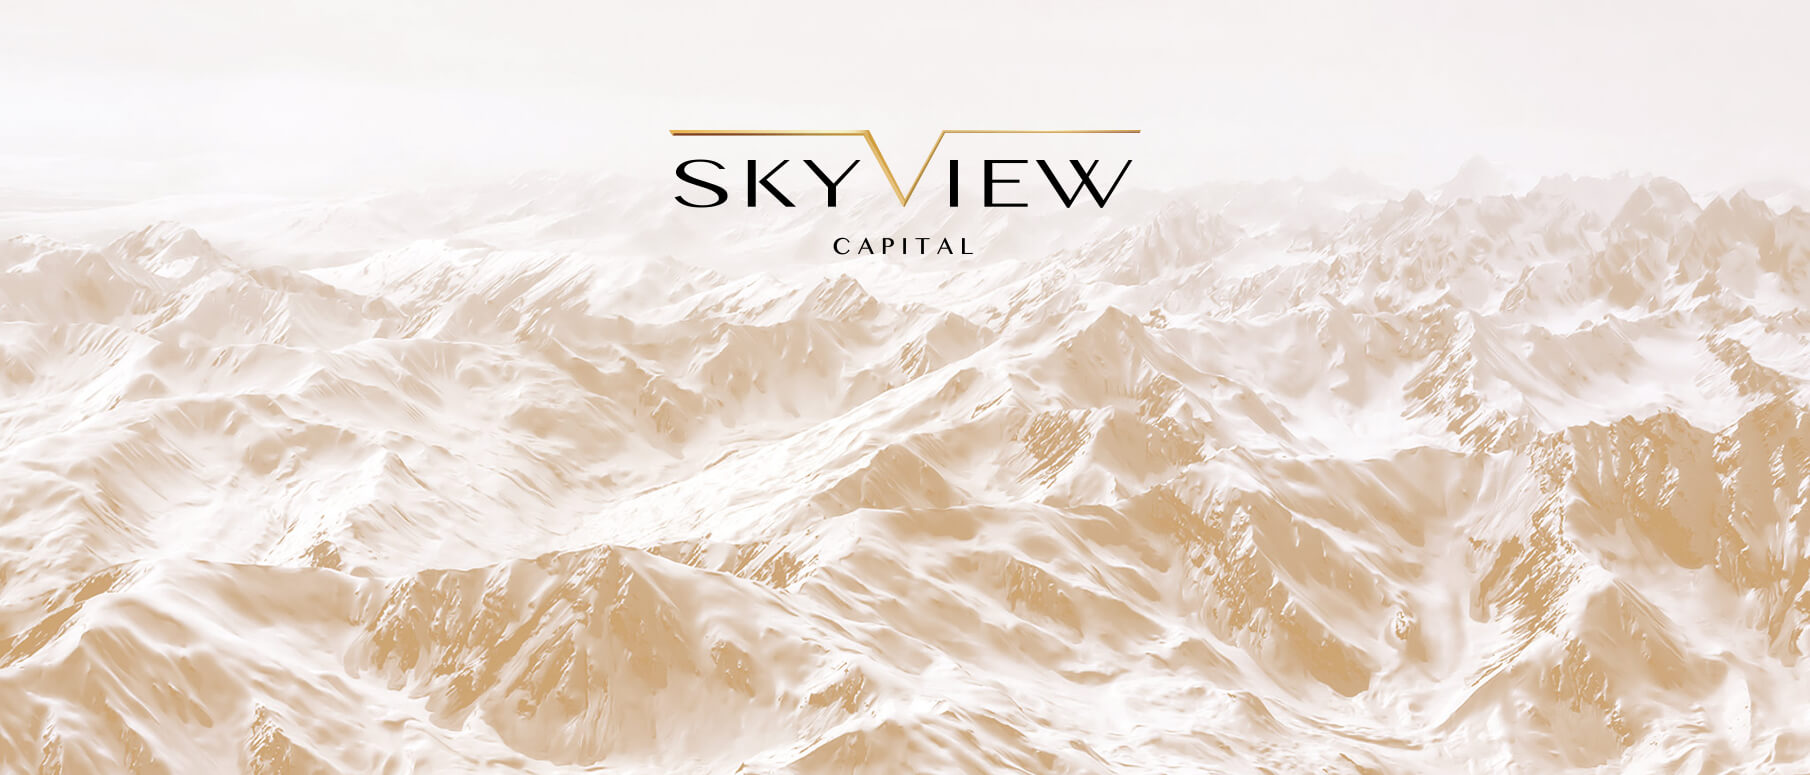 Skyview Capital - Continuum